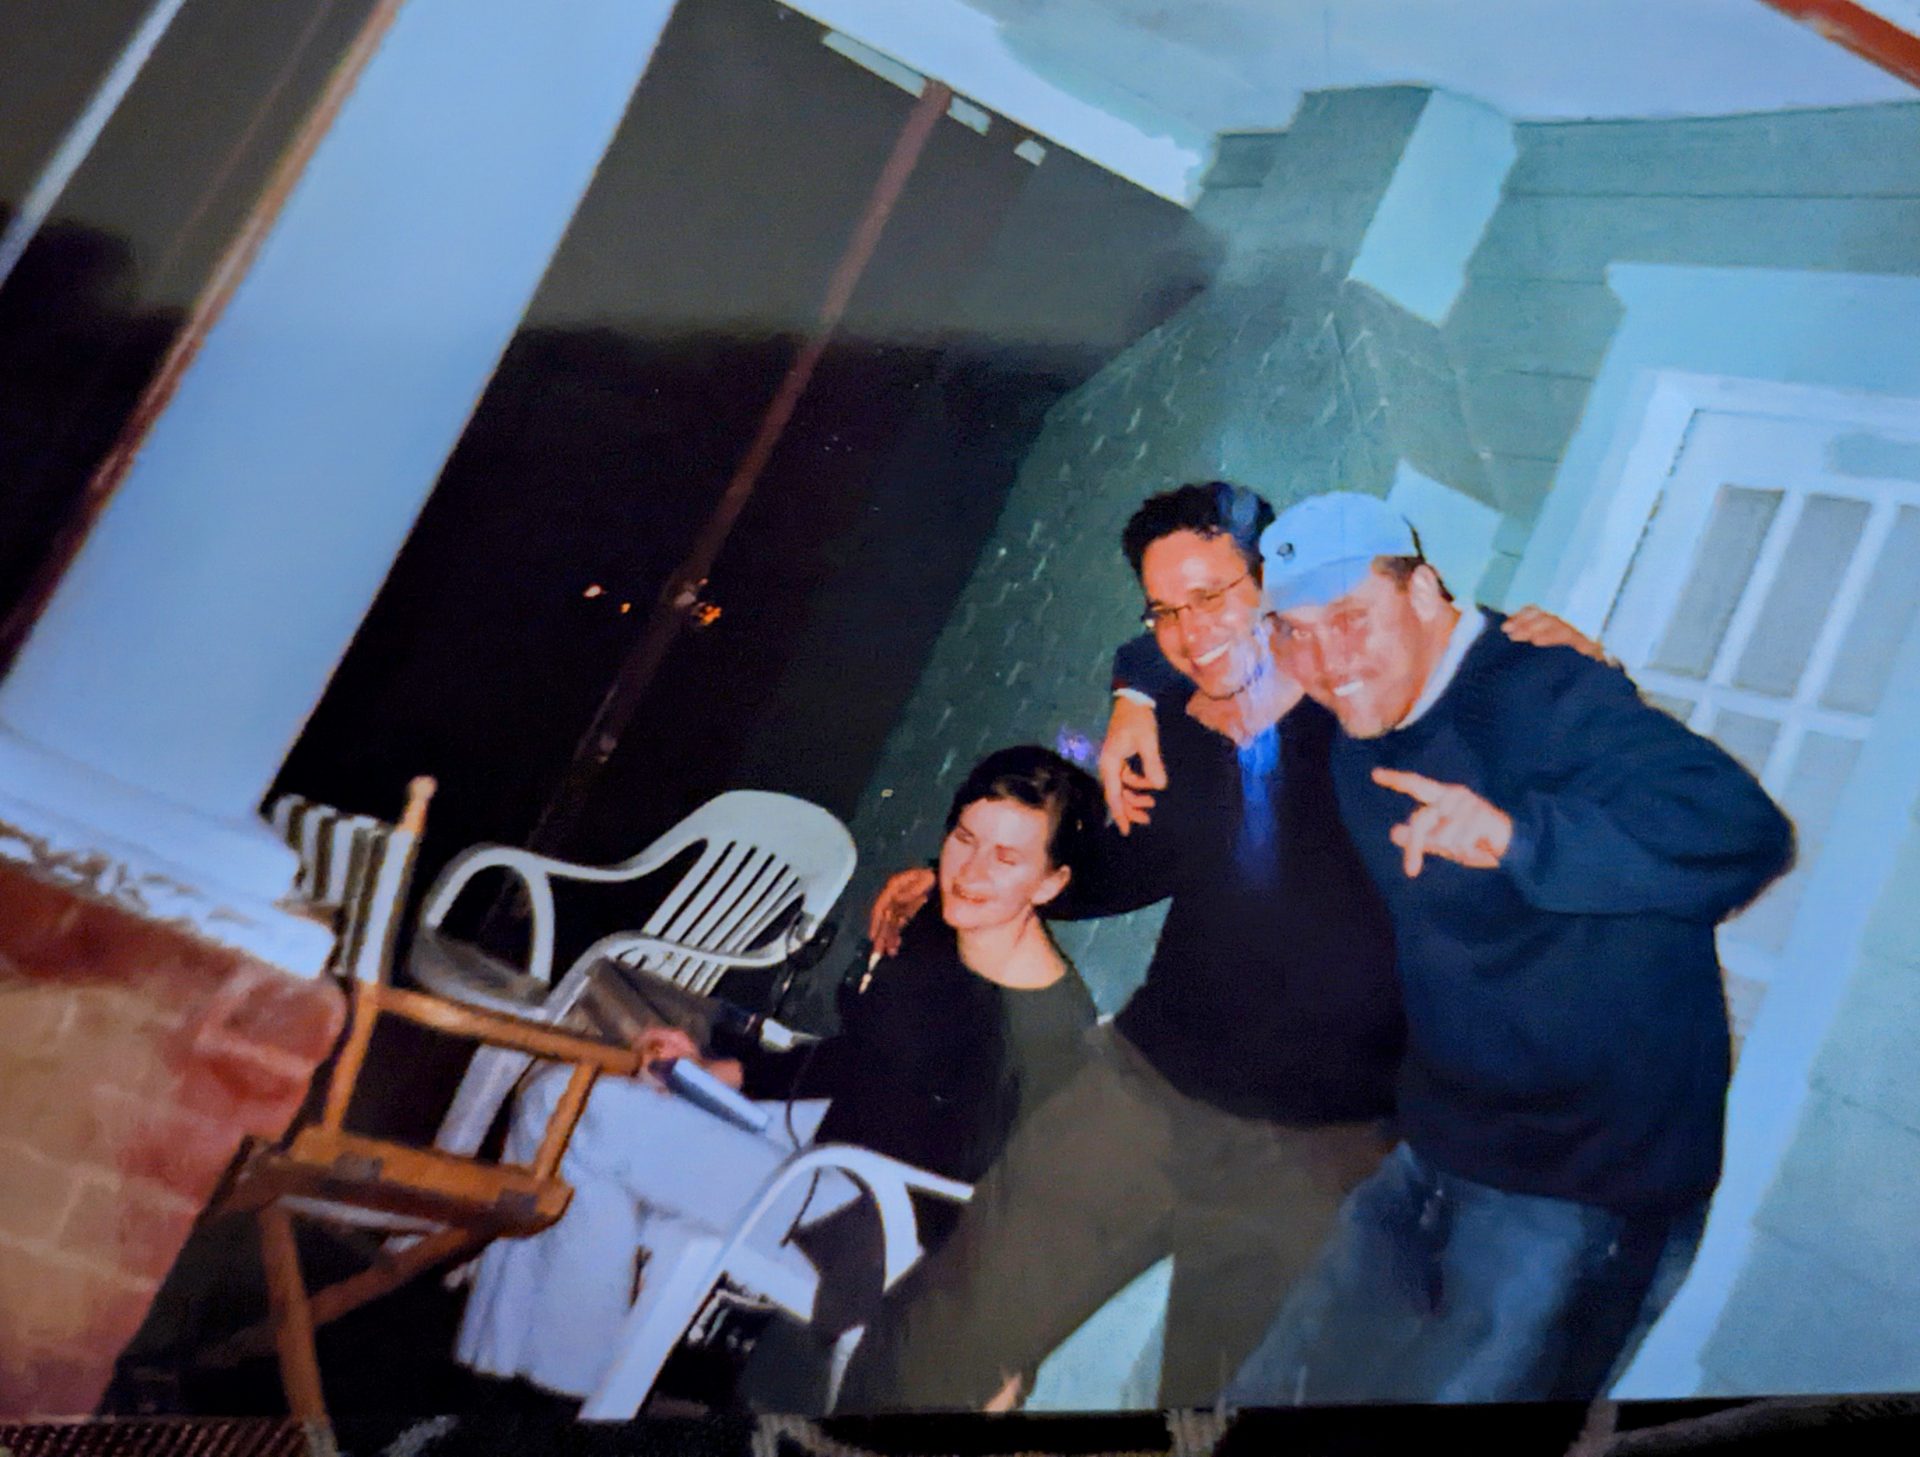 John (Moody), Frank, Elisabeth in 2005 at What's house. Jacksonville, FL